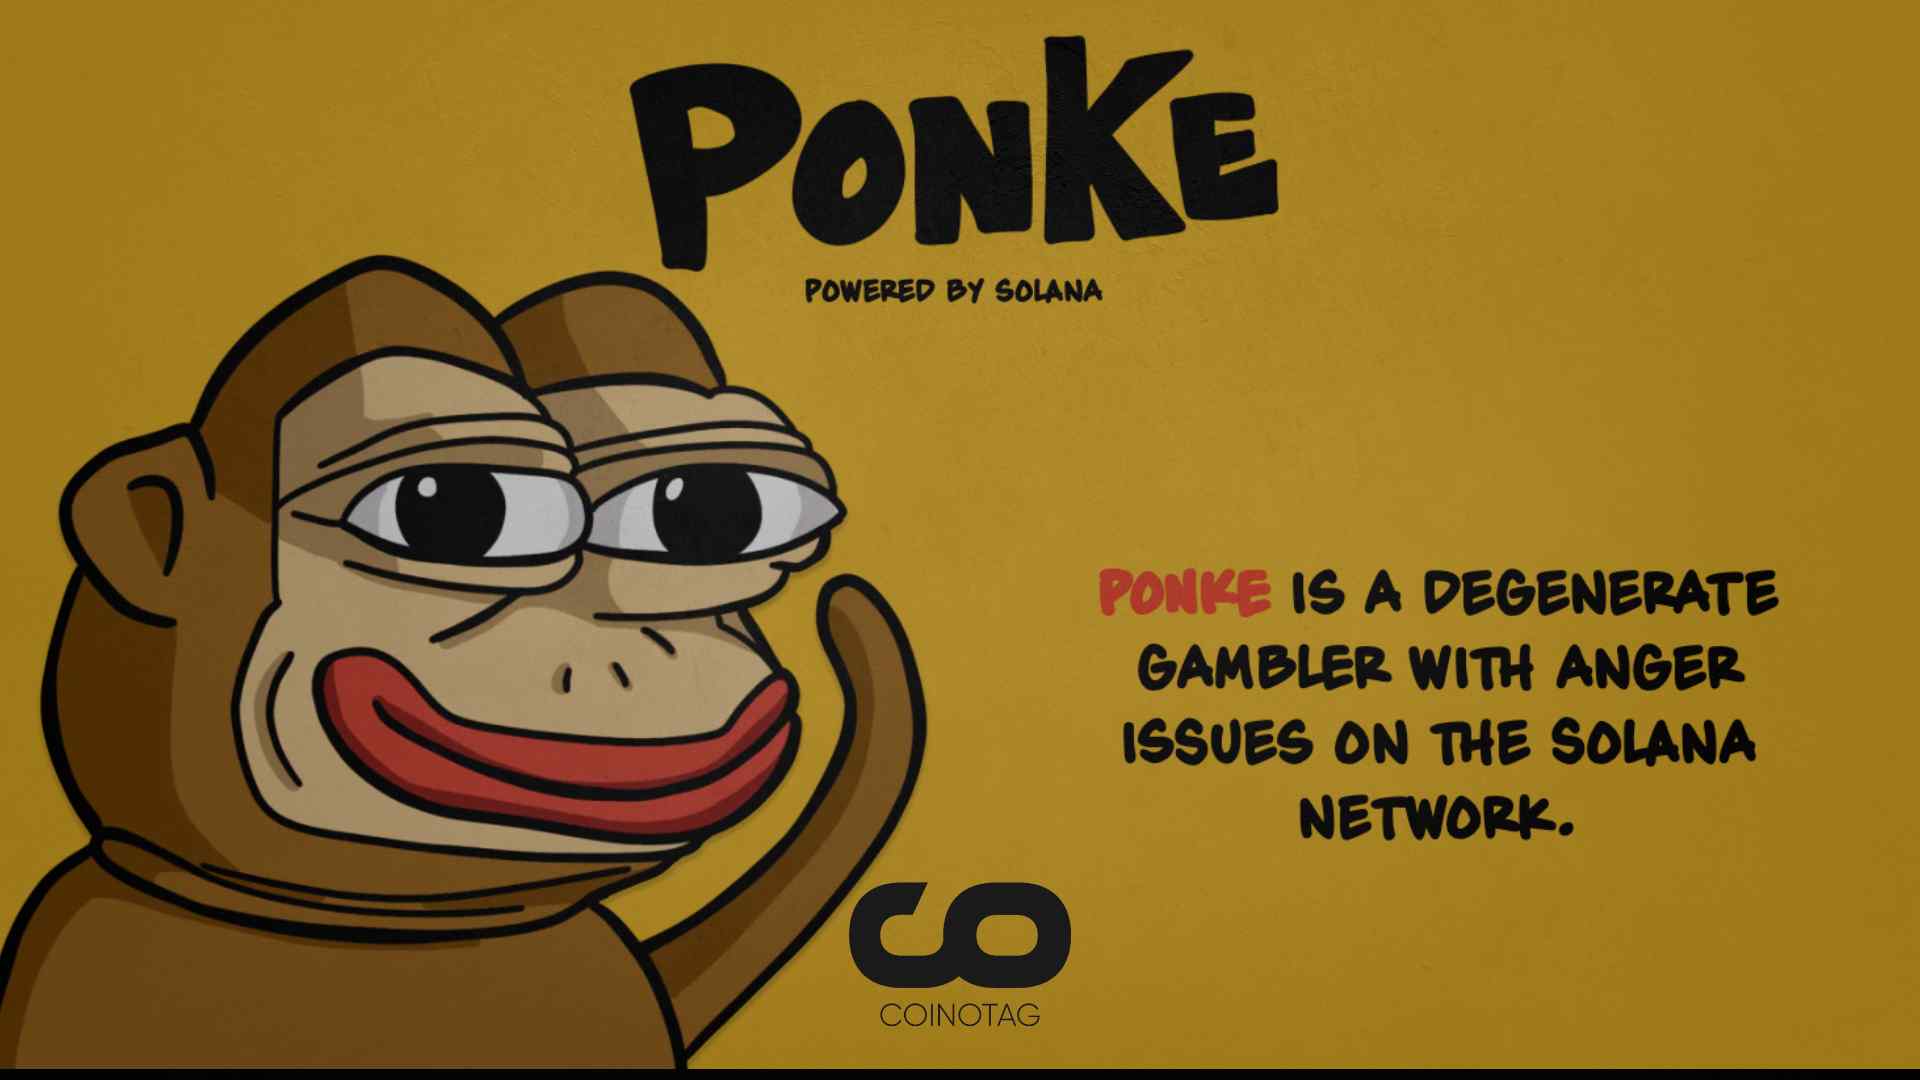 What is PONKE